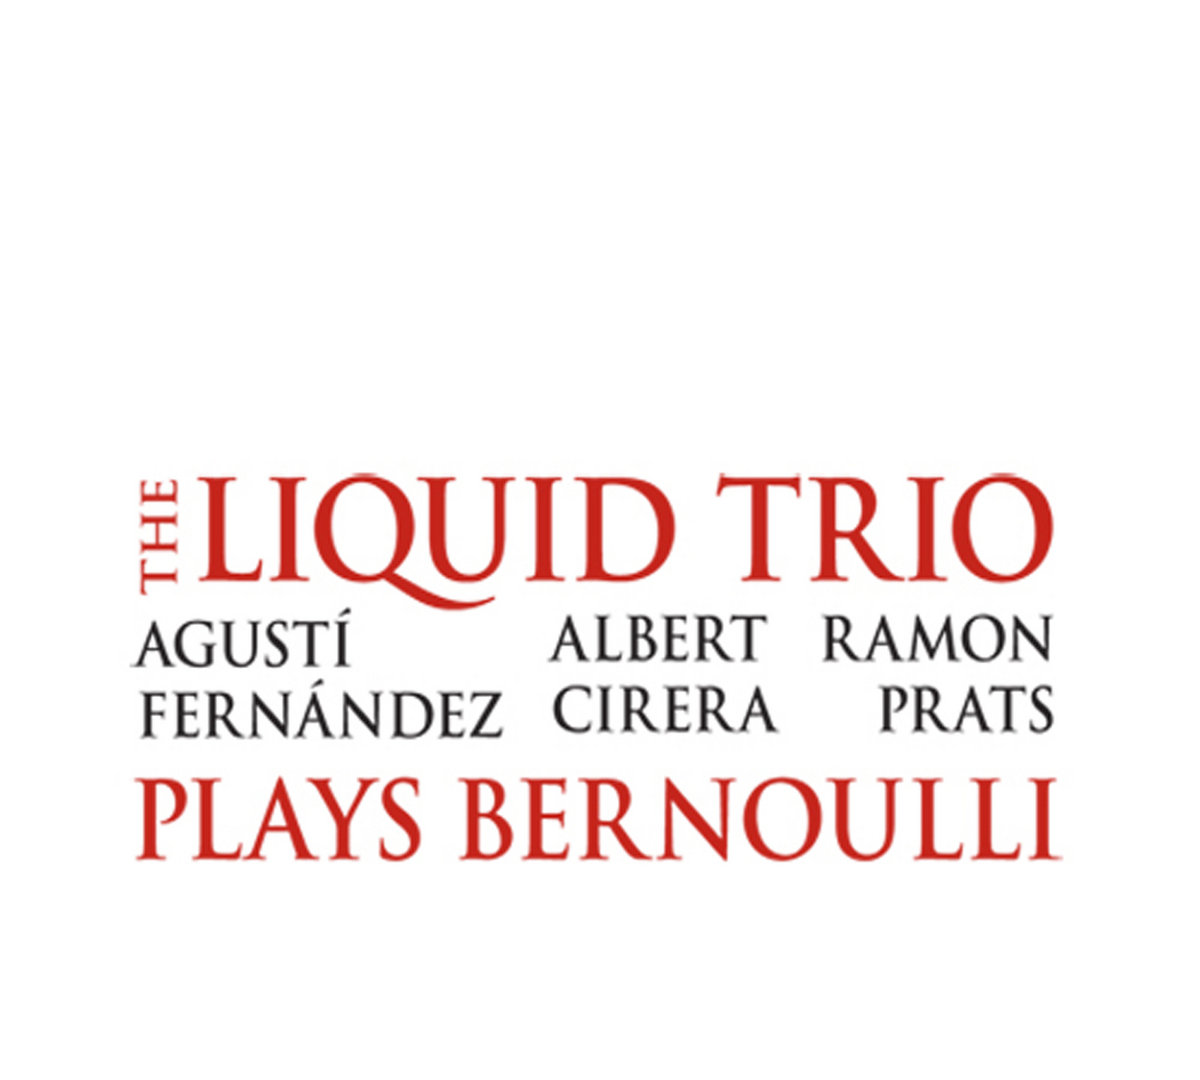 Image result for agusti-fernandez-albert-cirera-ramon-prats-the-liquid-trio-plays-bernoulli